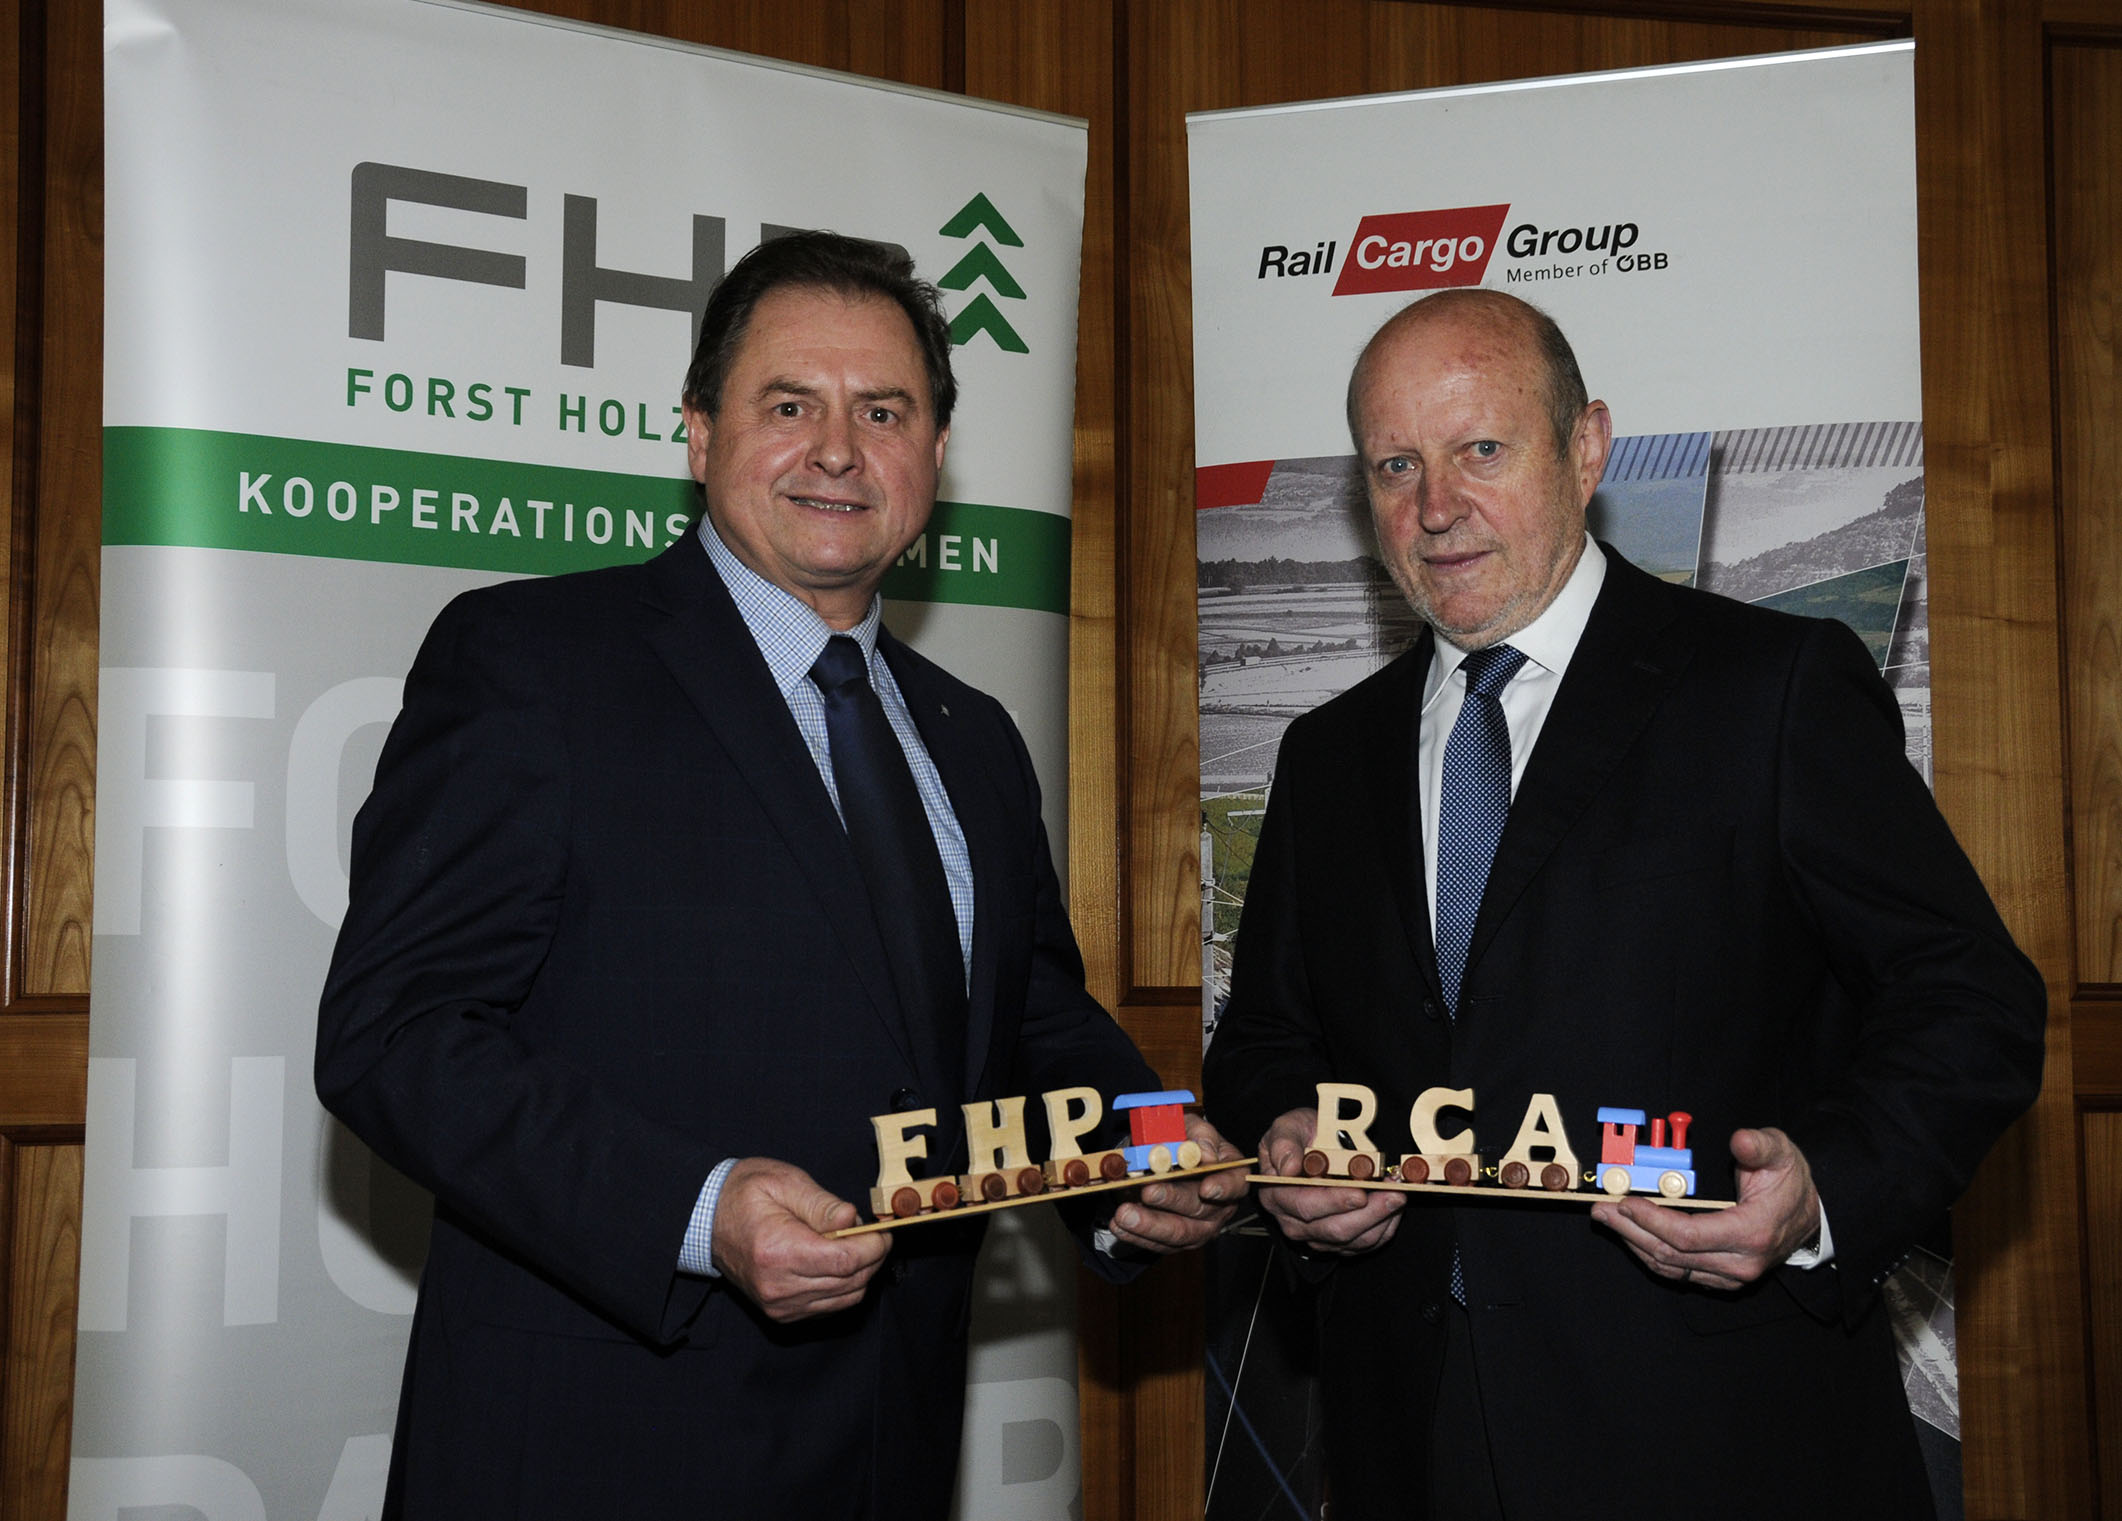 Austria’s timber industry keeps the faith with rail logistics